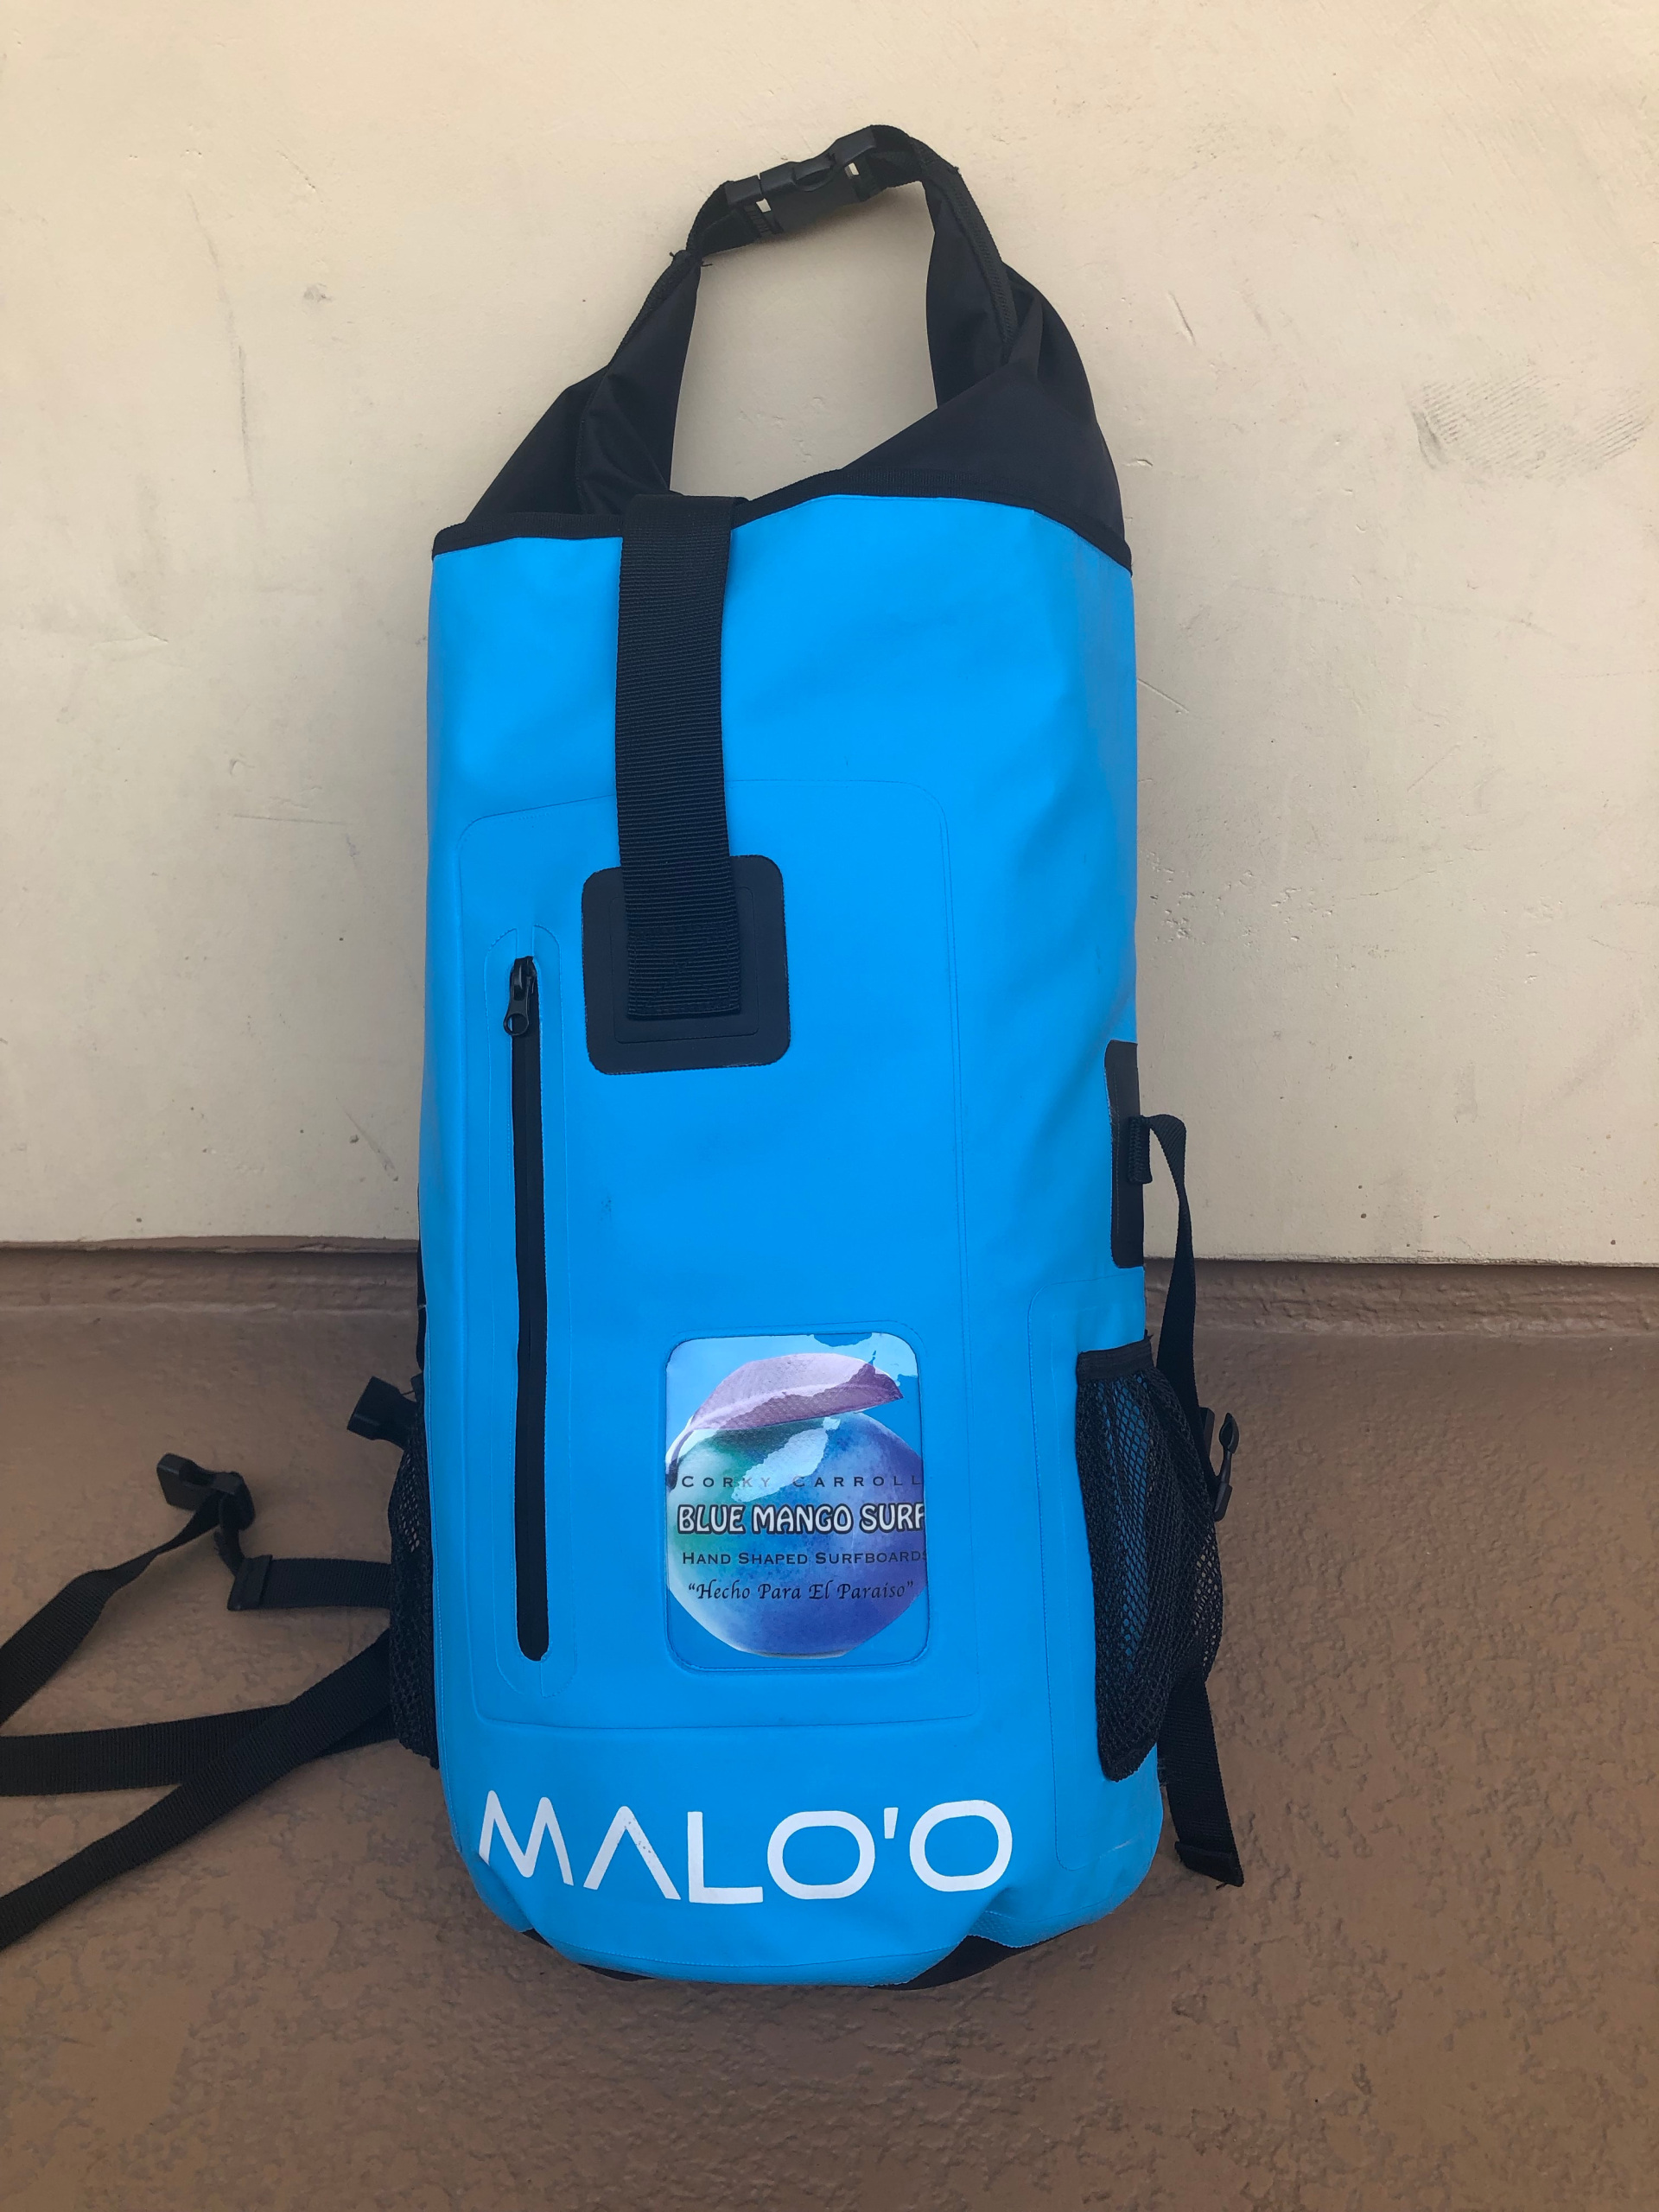 Malo'o Waterproof Dry Bag Backpack - Blue Mango Surf